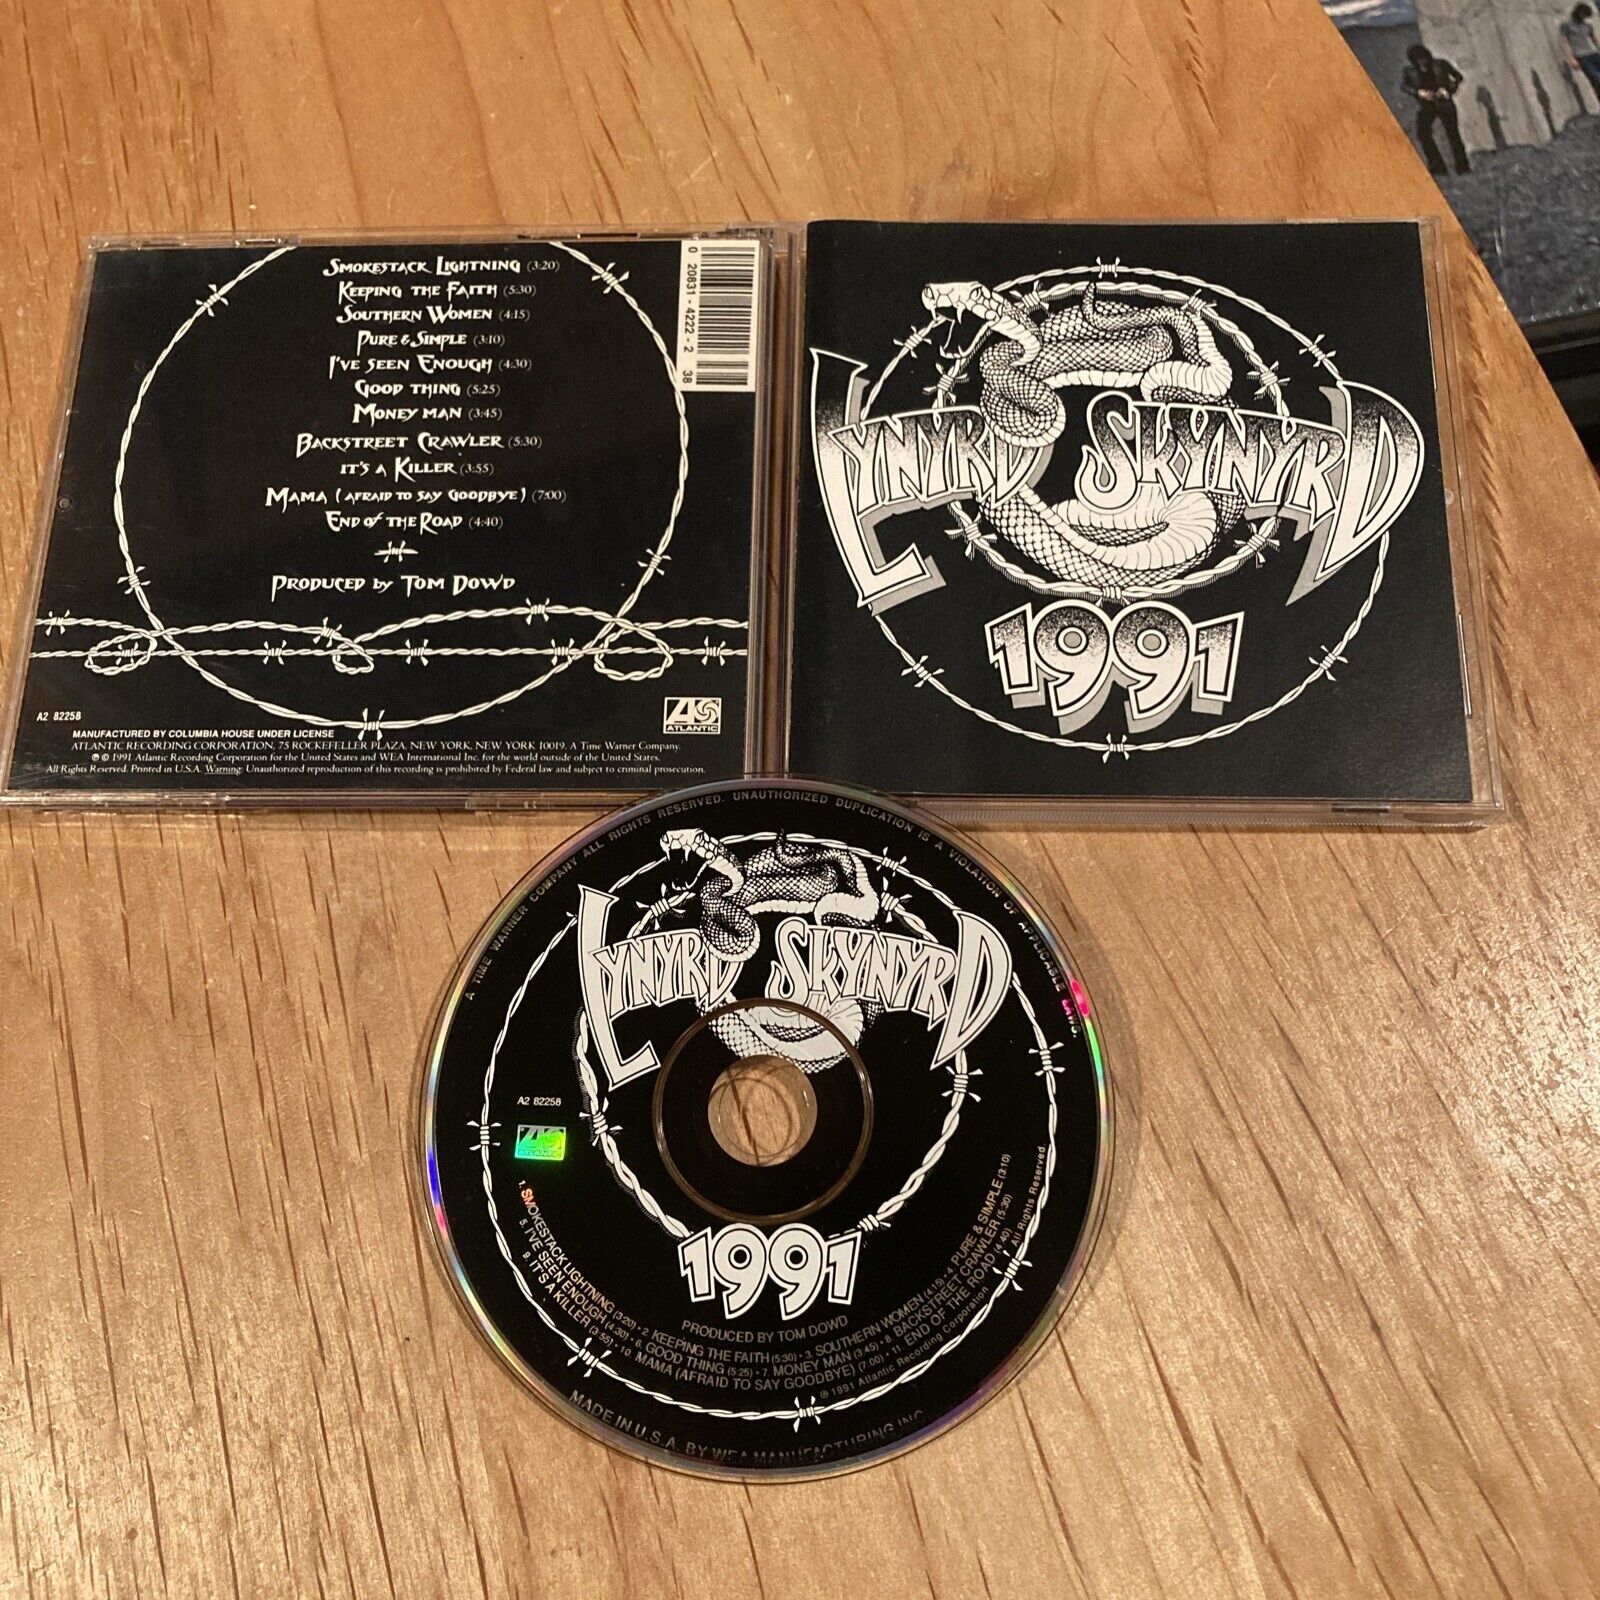 Lynyrd Skynyrd - 1991 CD 1st US press CRC van zant rossington collins metallica